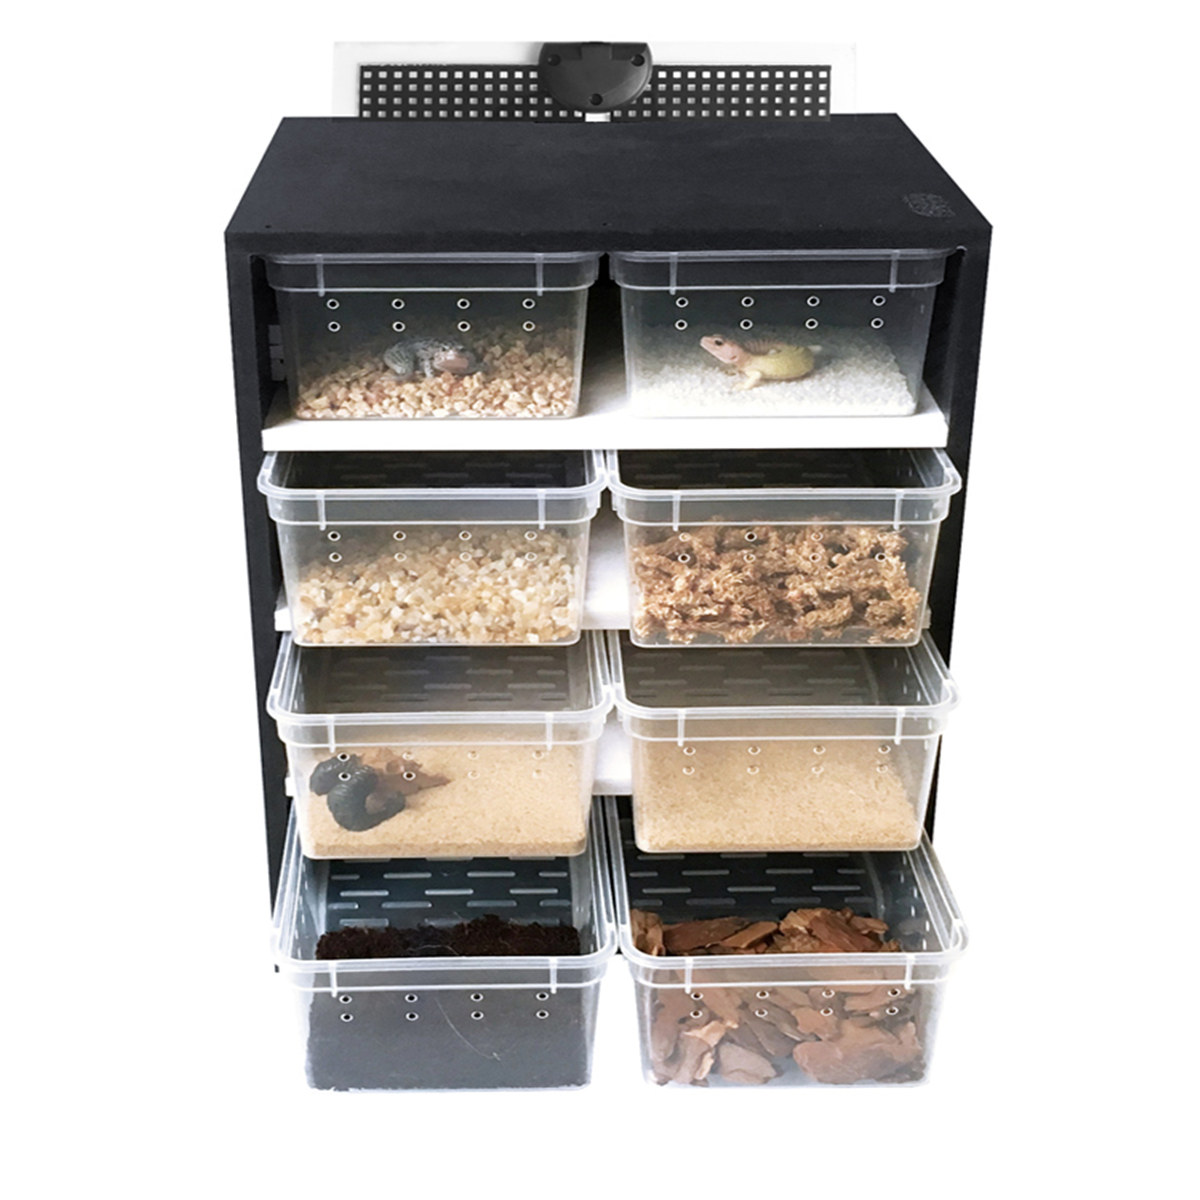 Integrated-Reptile-Breeding-Box-PVC-Transparent-Acrylic-Feeding-Box-Case-1379176